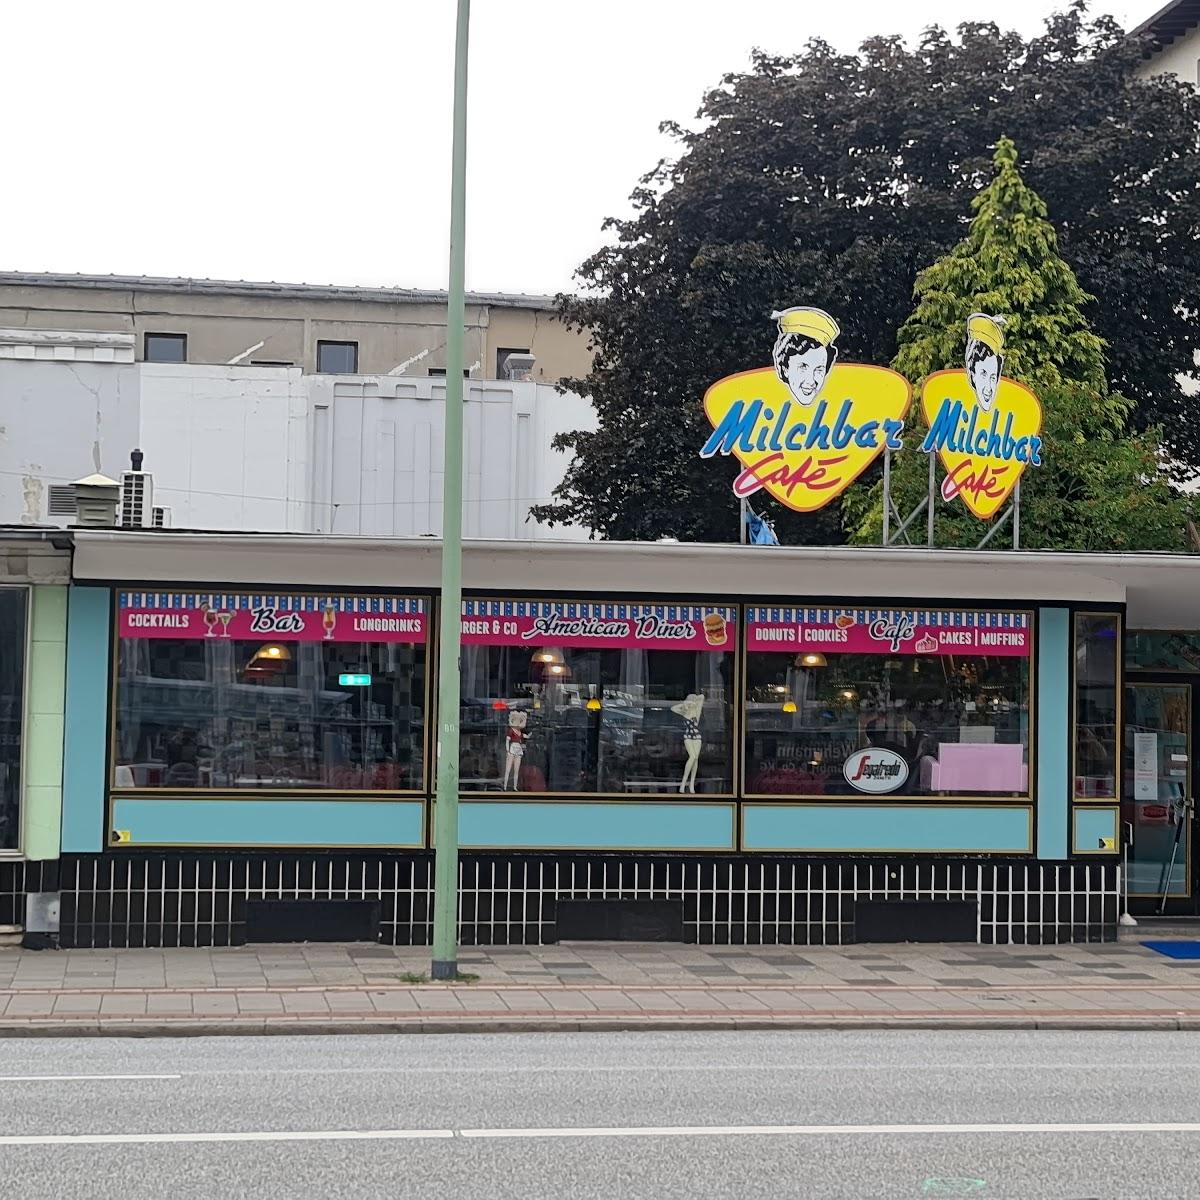 Restaurant "Milchbar  - Café & Diner | Milchshakes, Bürger, Hotdogs, Ice Creams, Pancakes uvm." in Bremerhaven